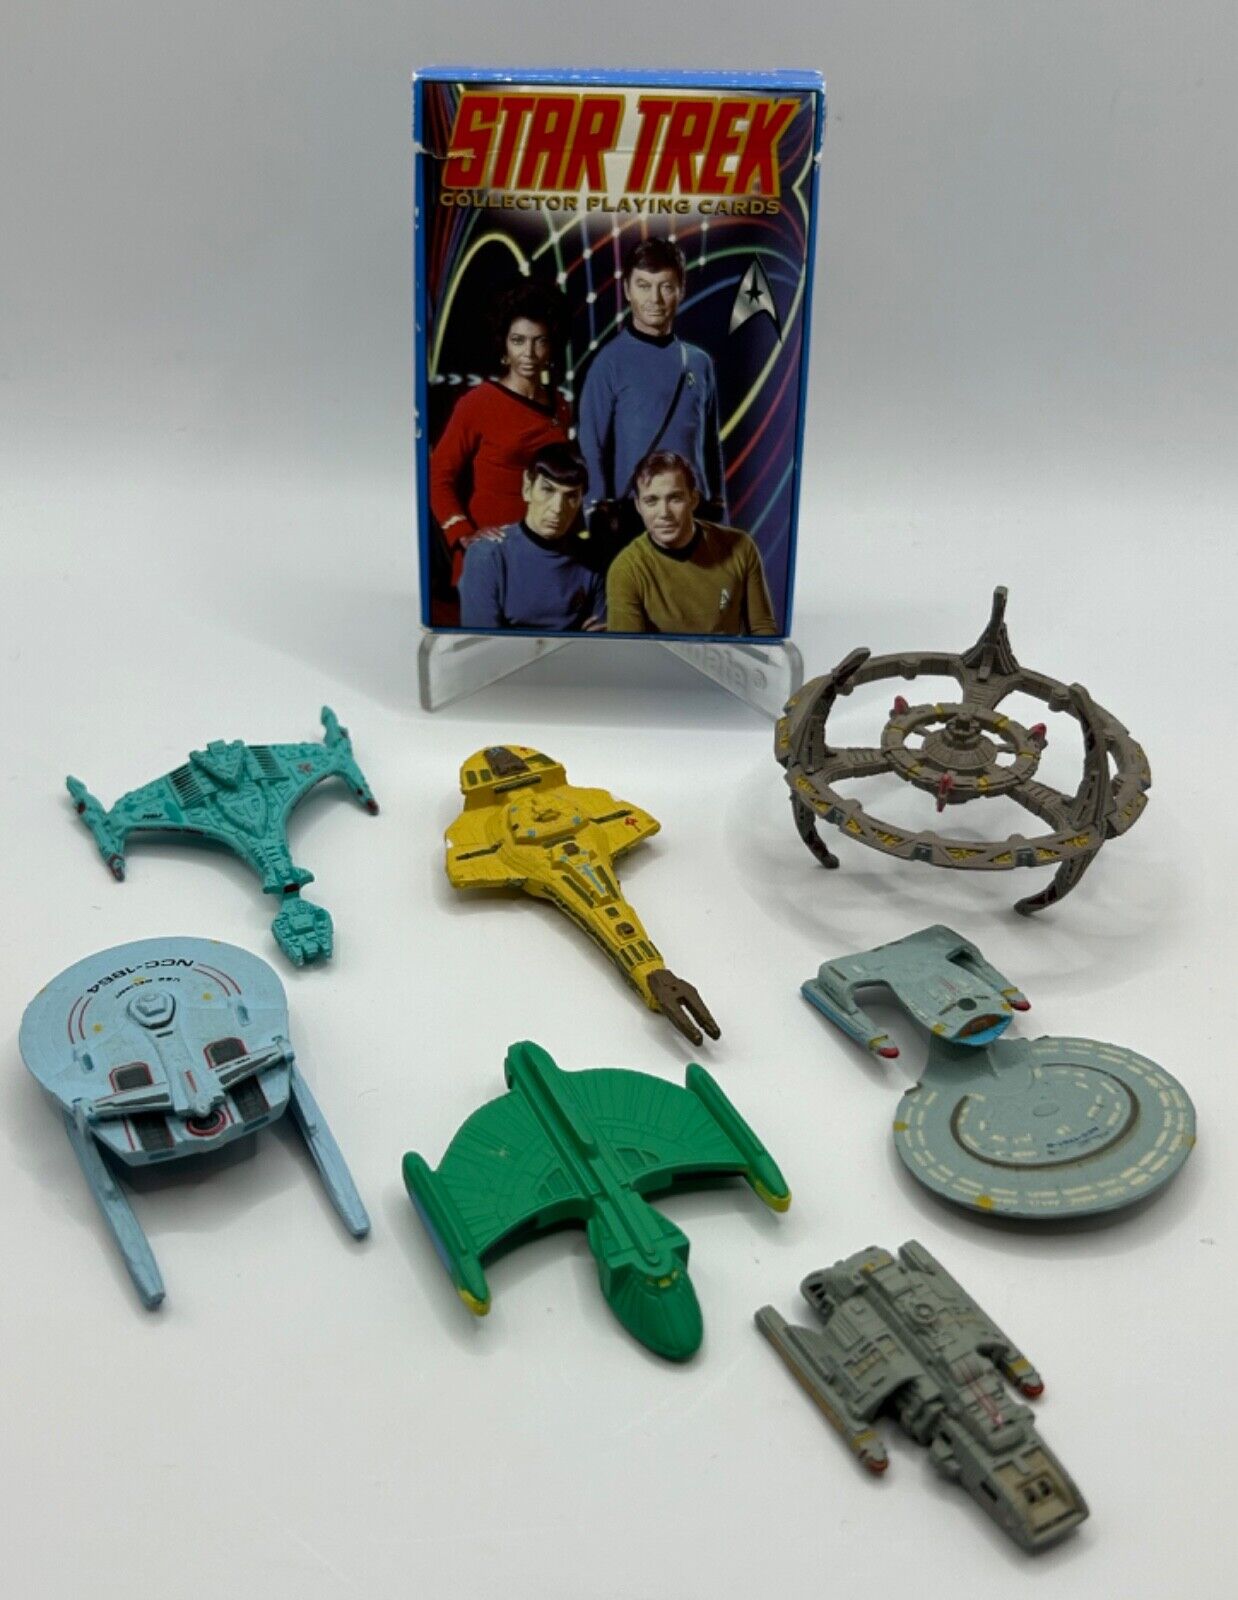 Star Trek micro machines lot 7 Space Ships & Star Trek playing deck of cards